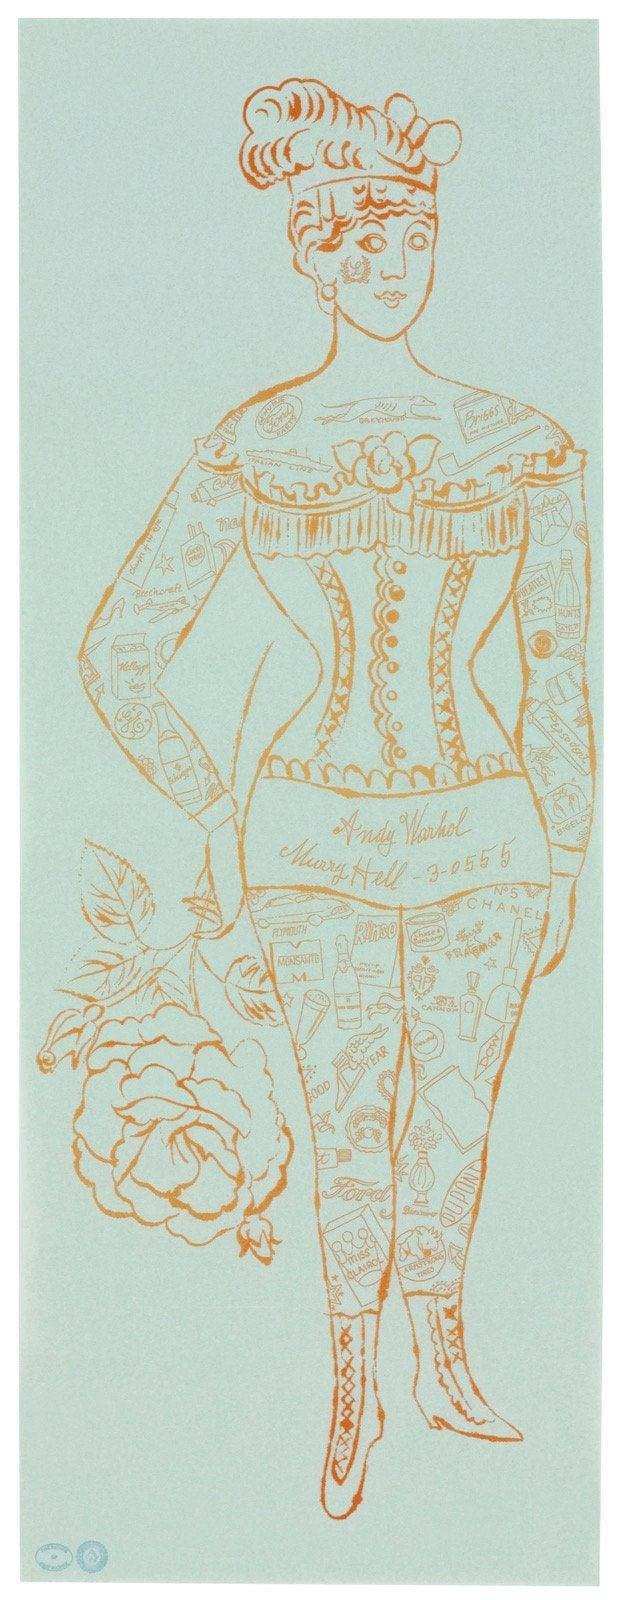 Andy Warhol (1928-1987) Tattooed Woman Holding Rose - Choice Fine Art